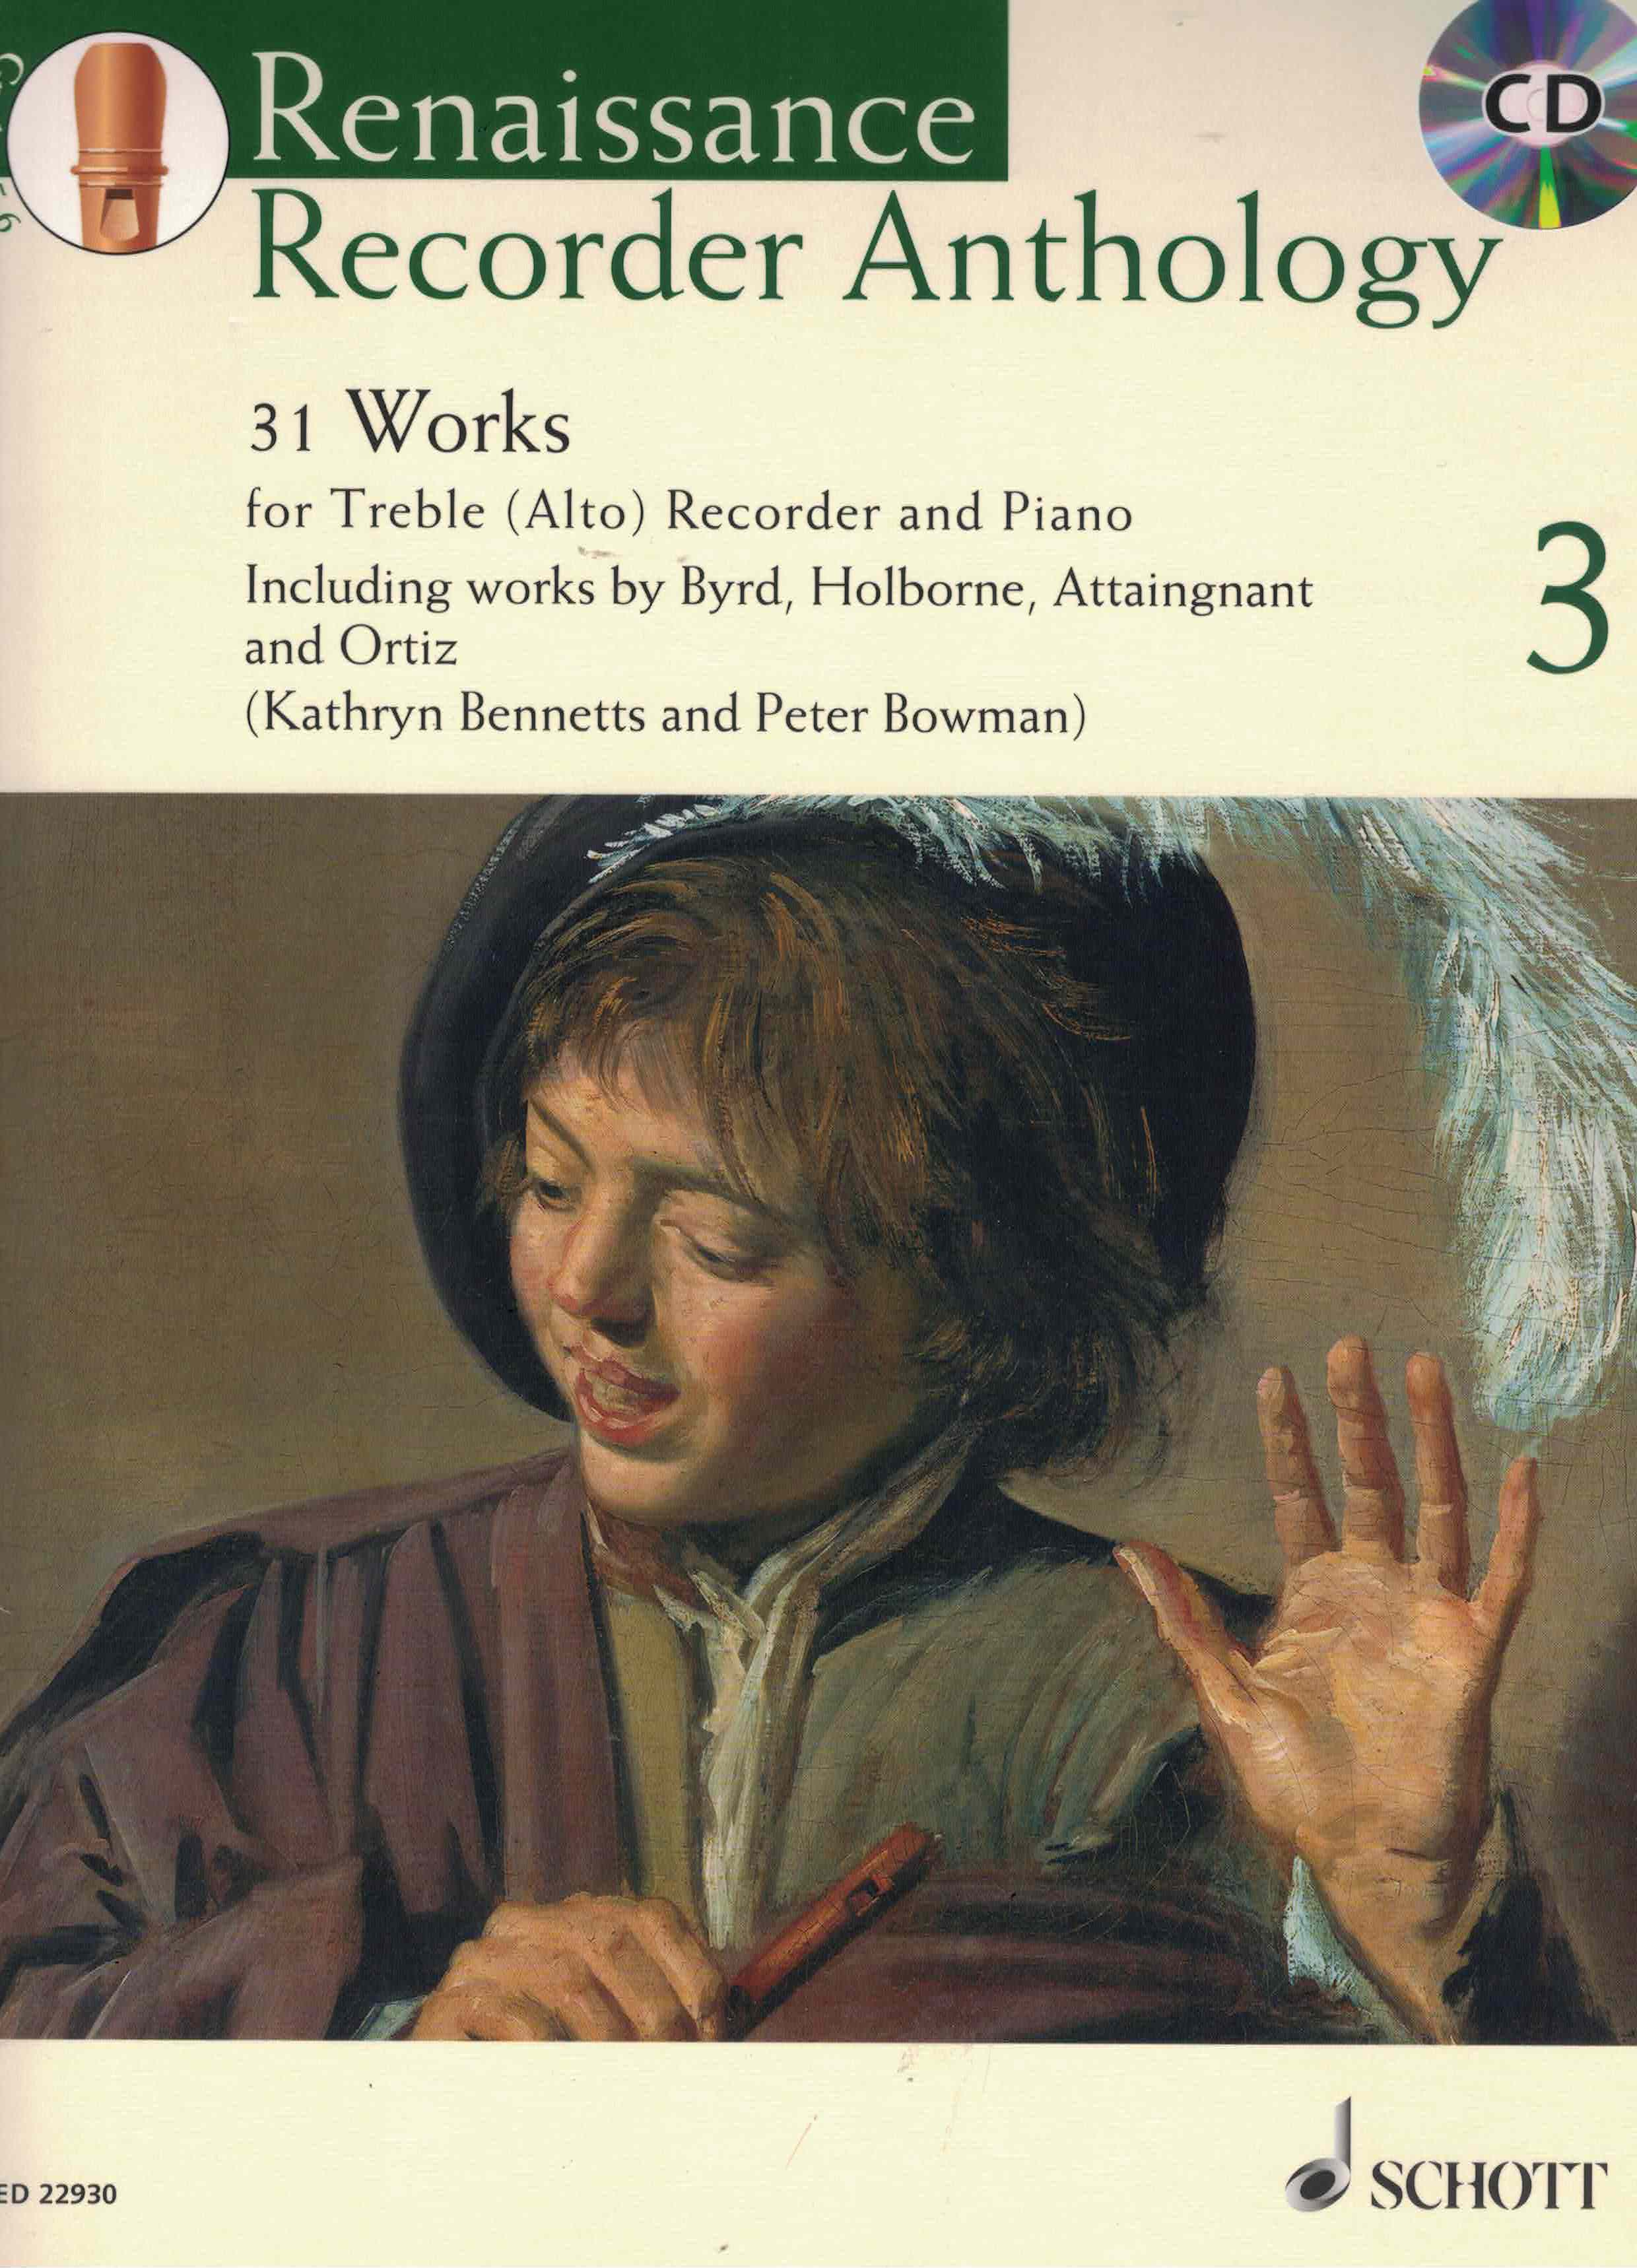 Renaissance Recorder Anthology 3, Abfl. Klav. online mat.